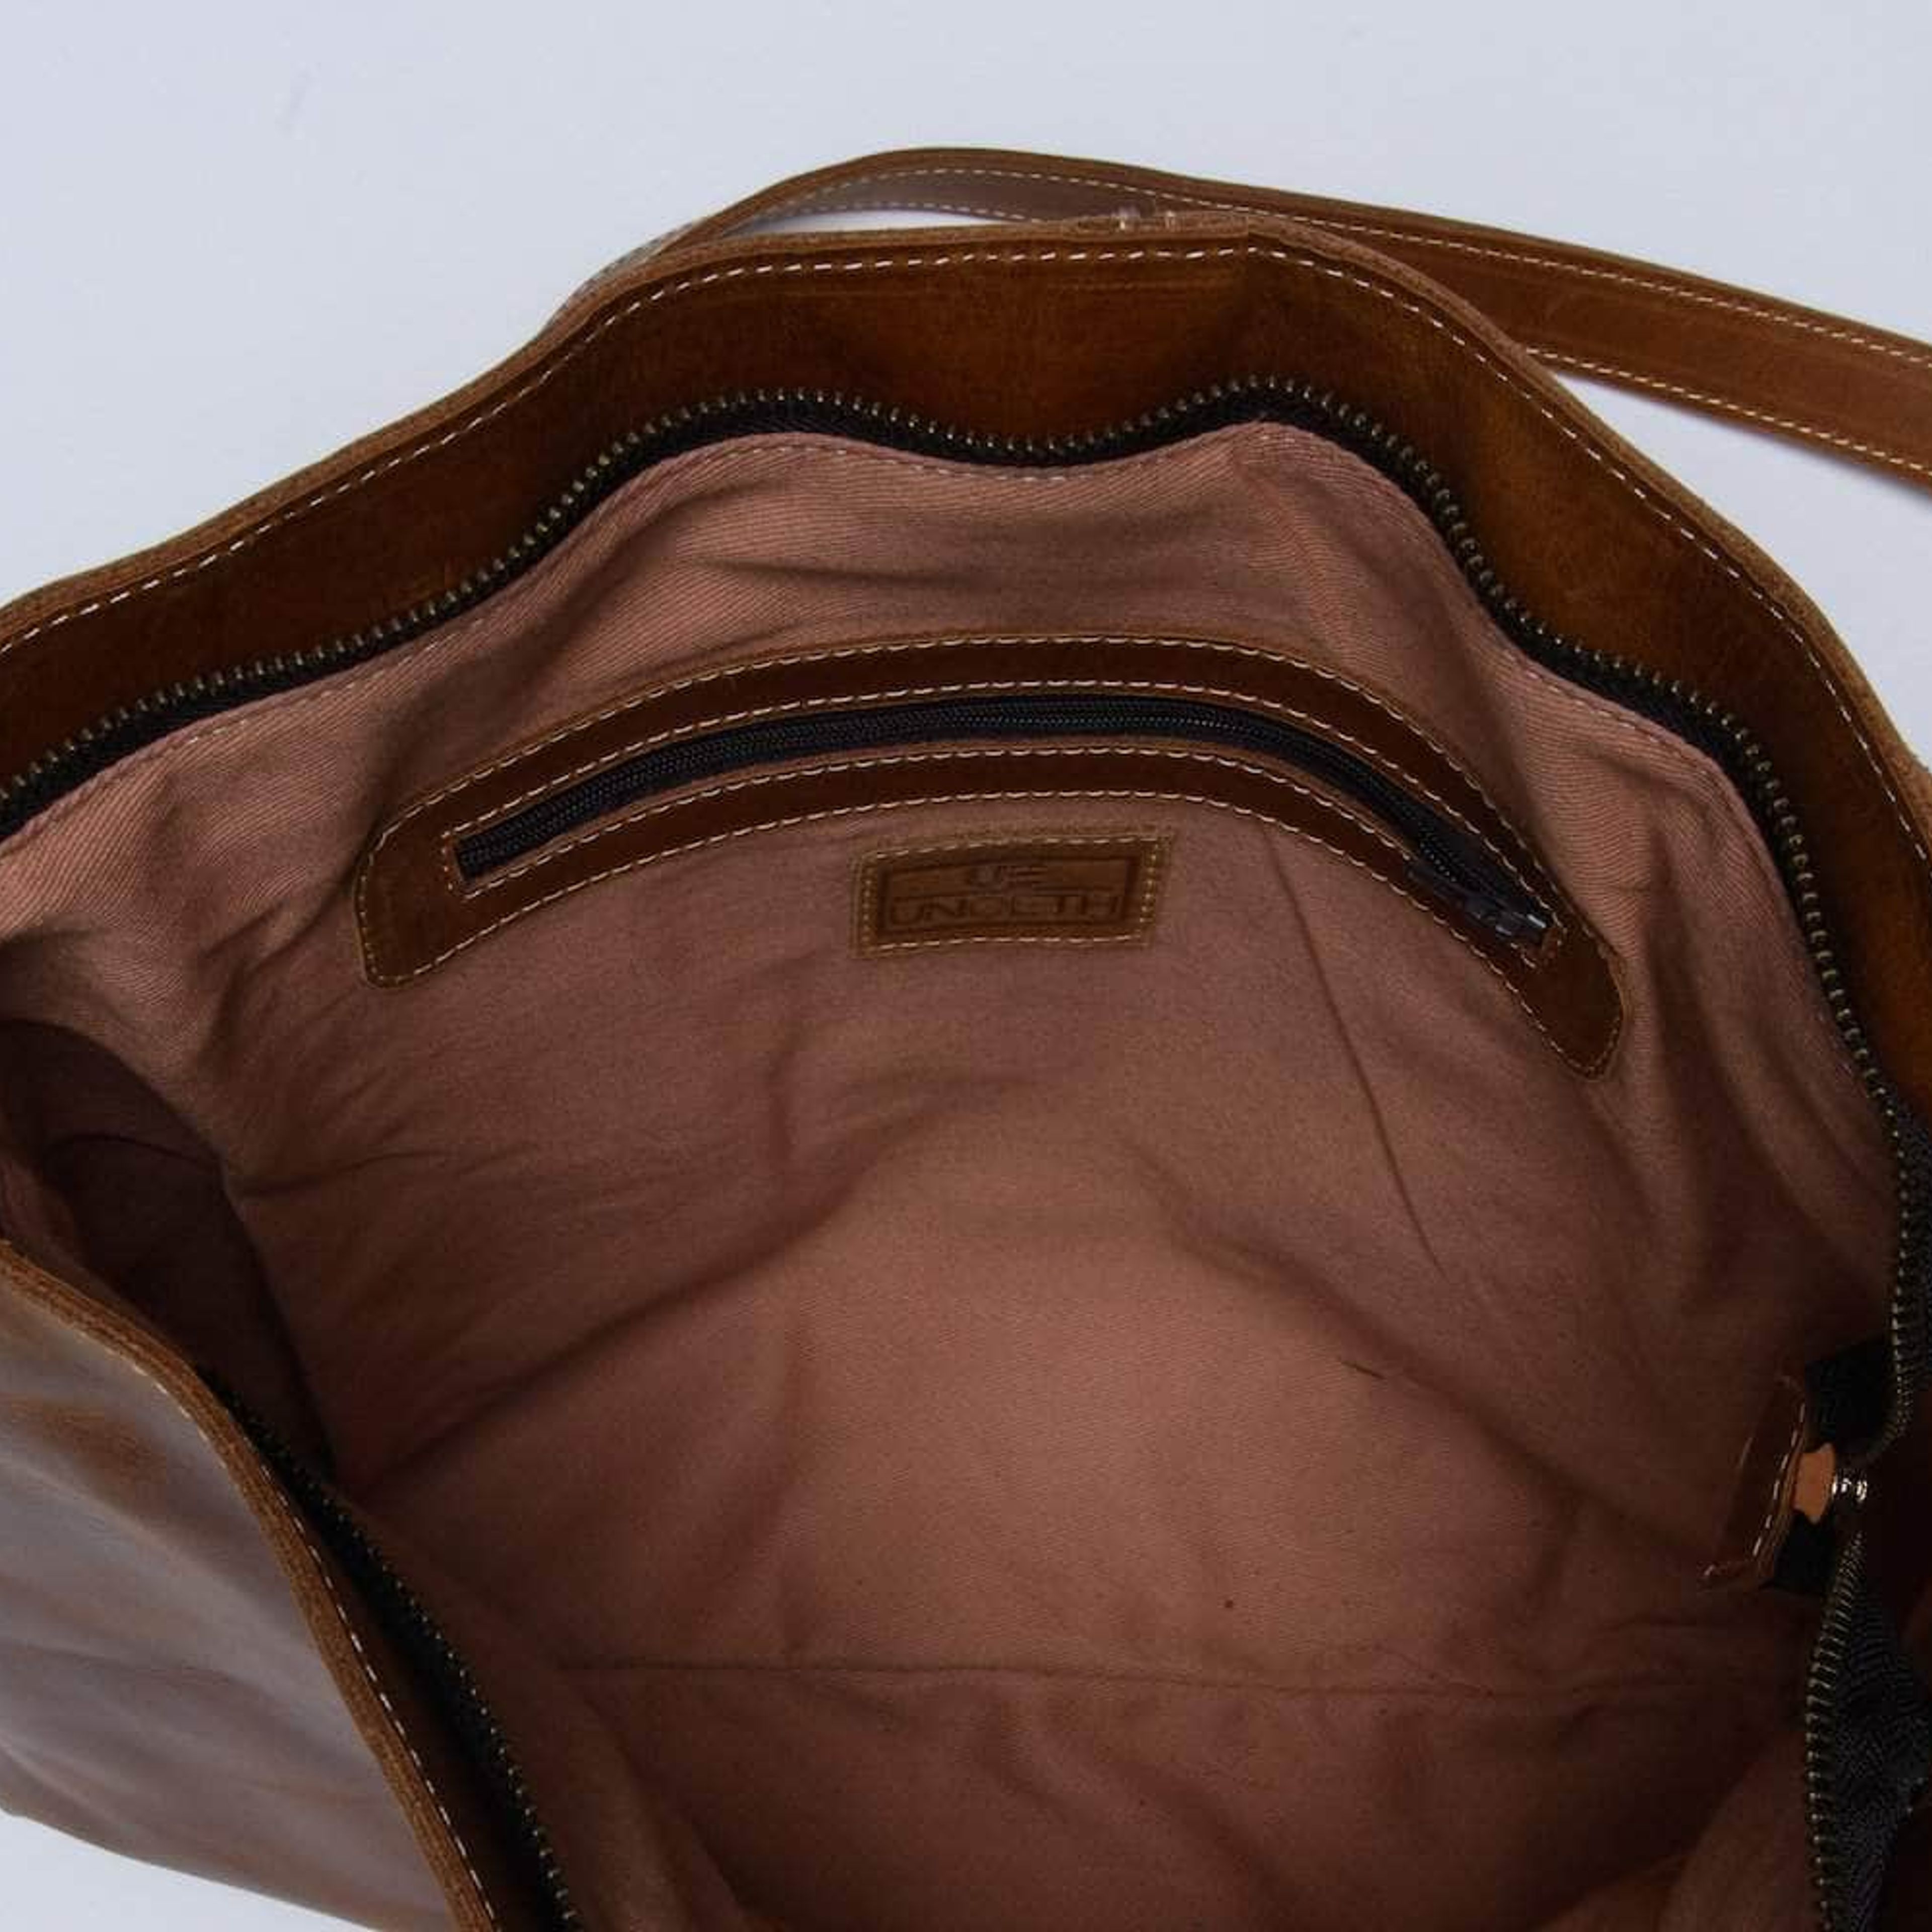 Telak Leather Messenger Bag - Almond Brown